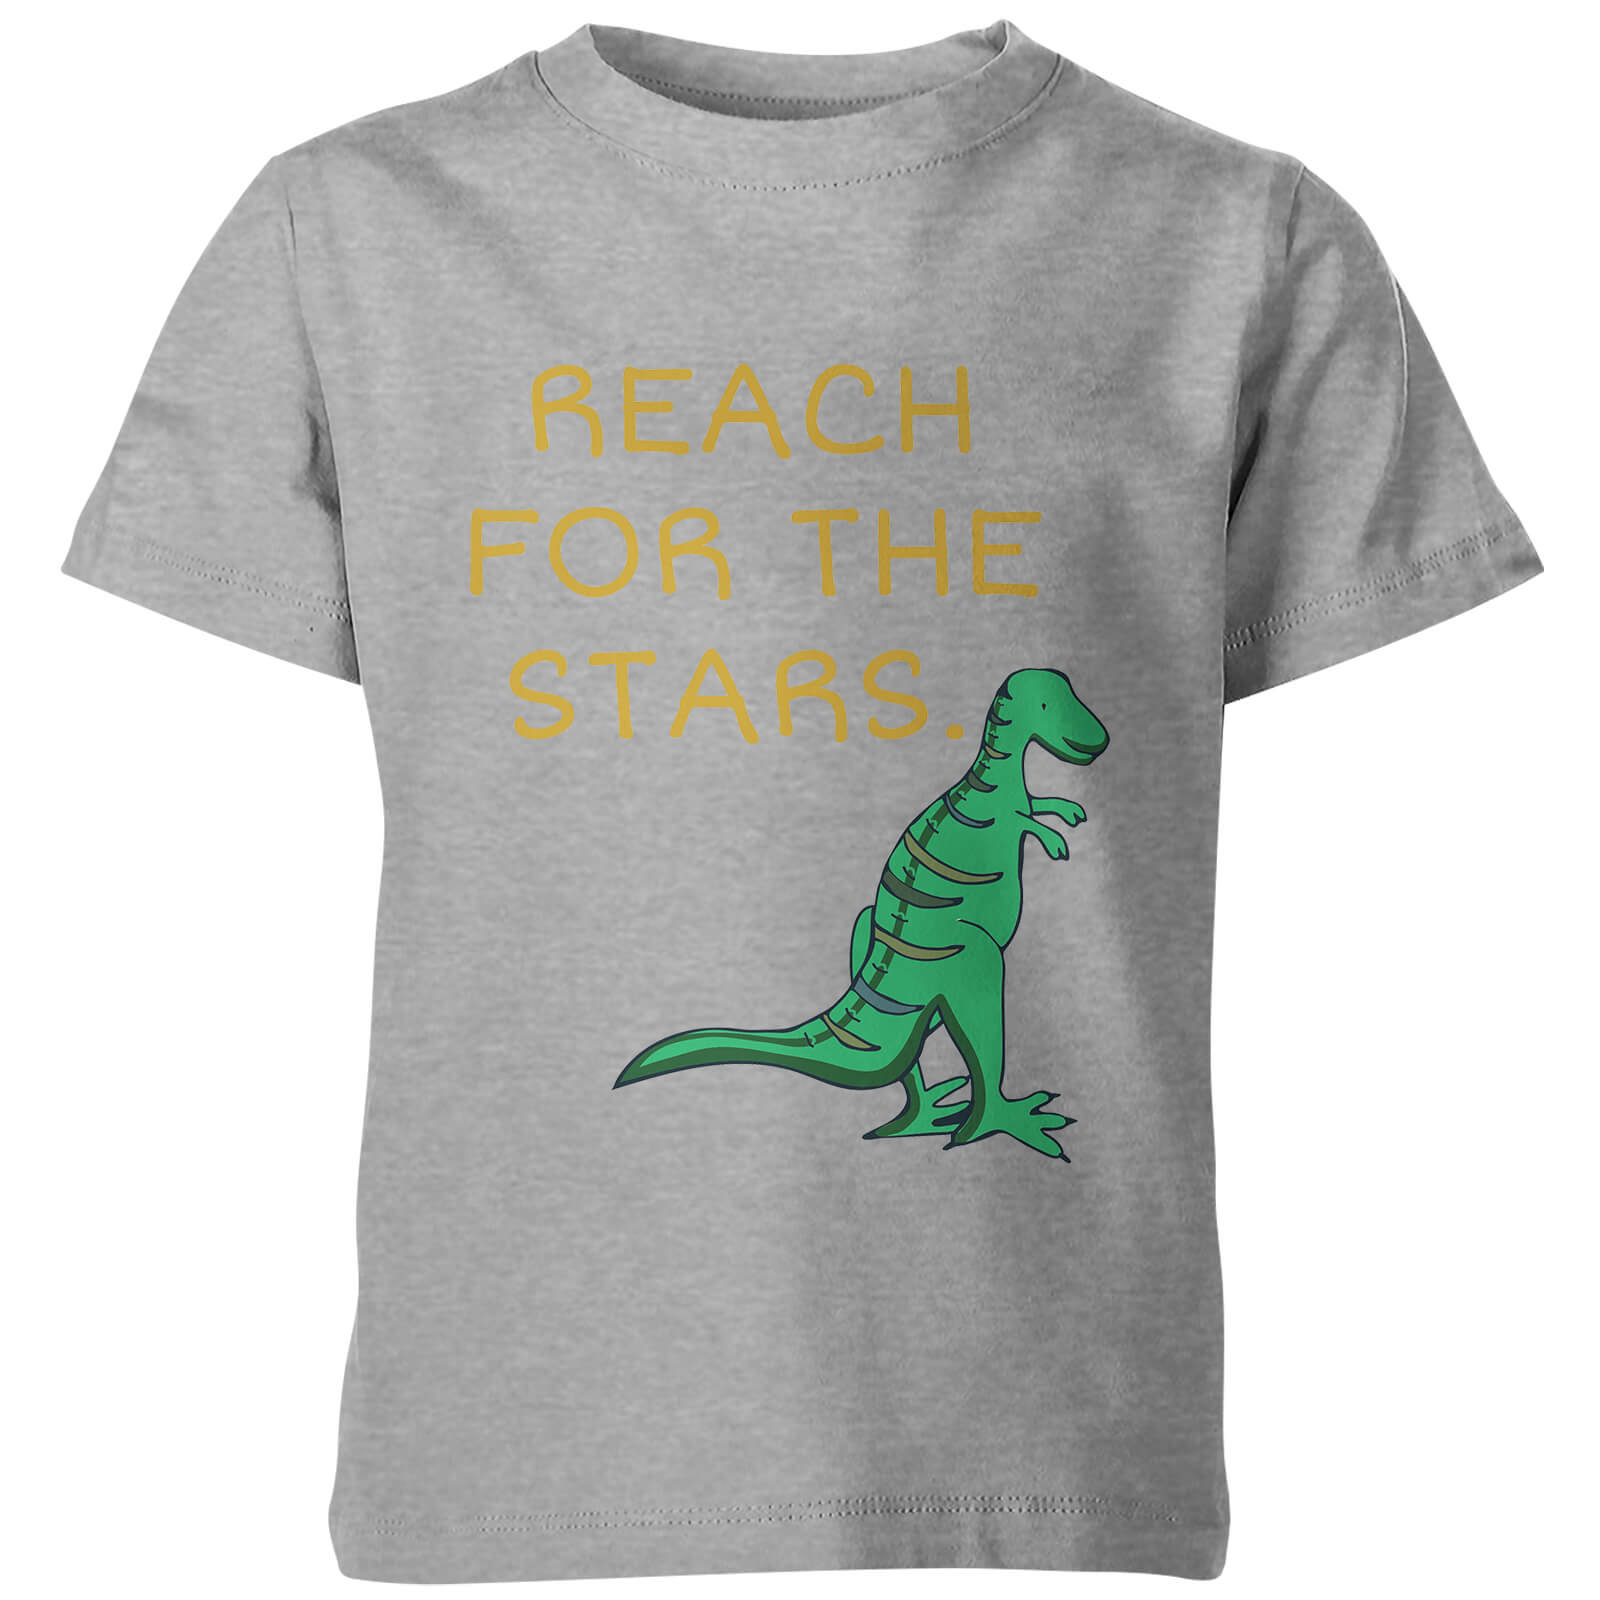 My Little Rascal Kids Dinosaur Reach for the Stars Grey T-Shirt - 3-4 Years - Grey